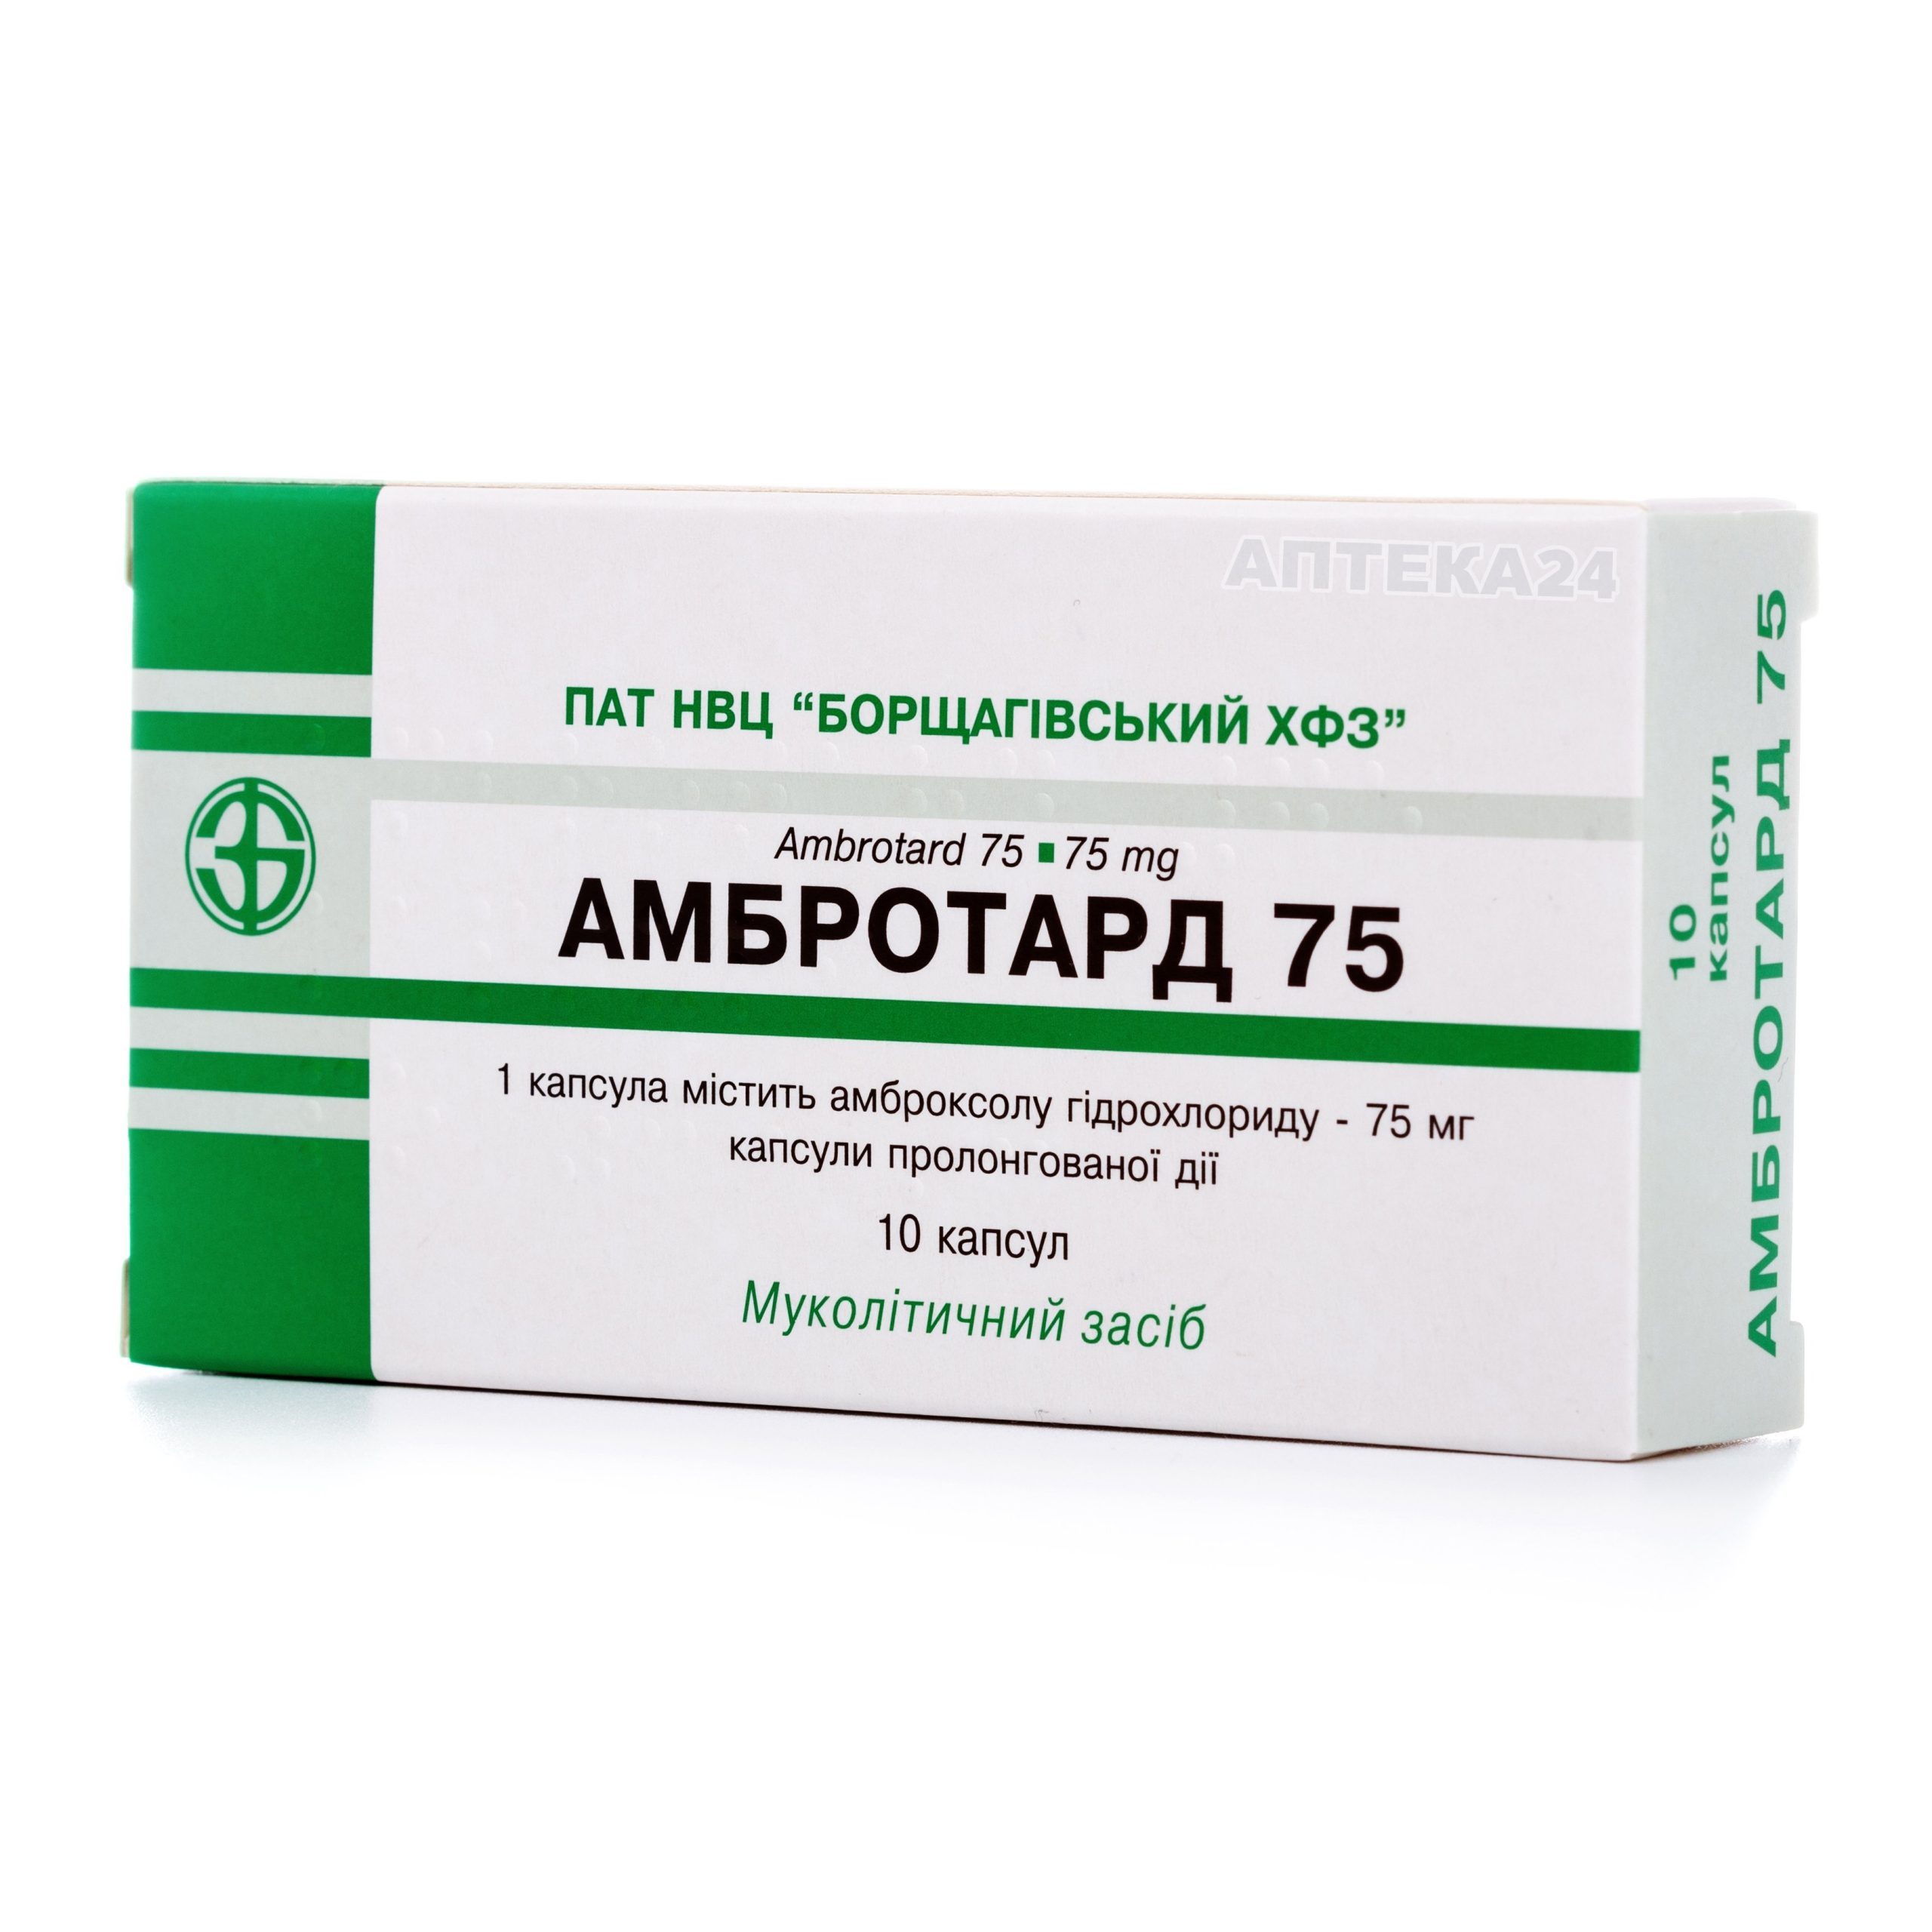 Амбротард капсулы 75 мг N10_6001b73c29a21.jpeg